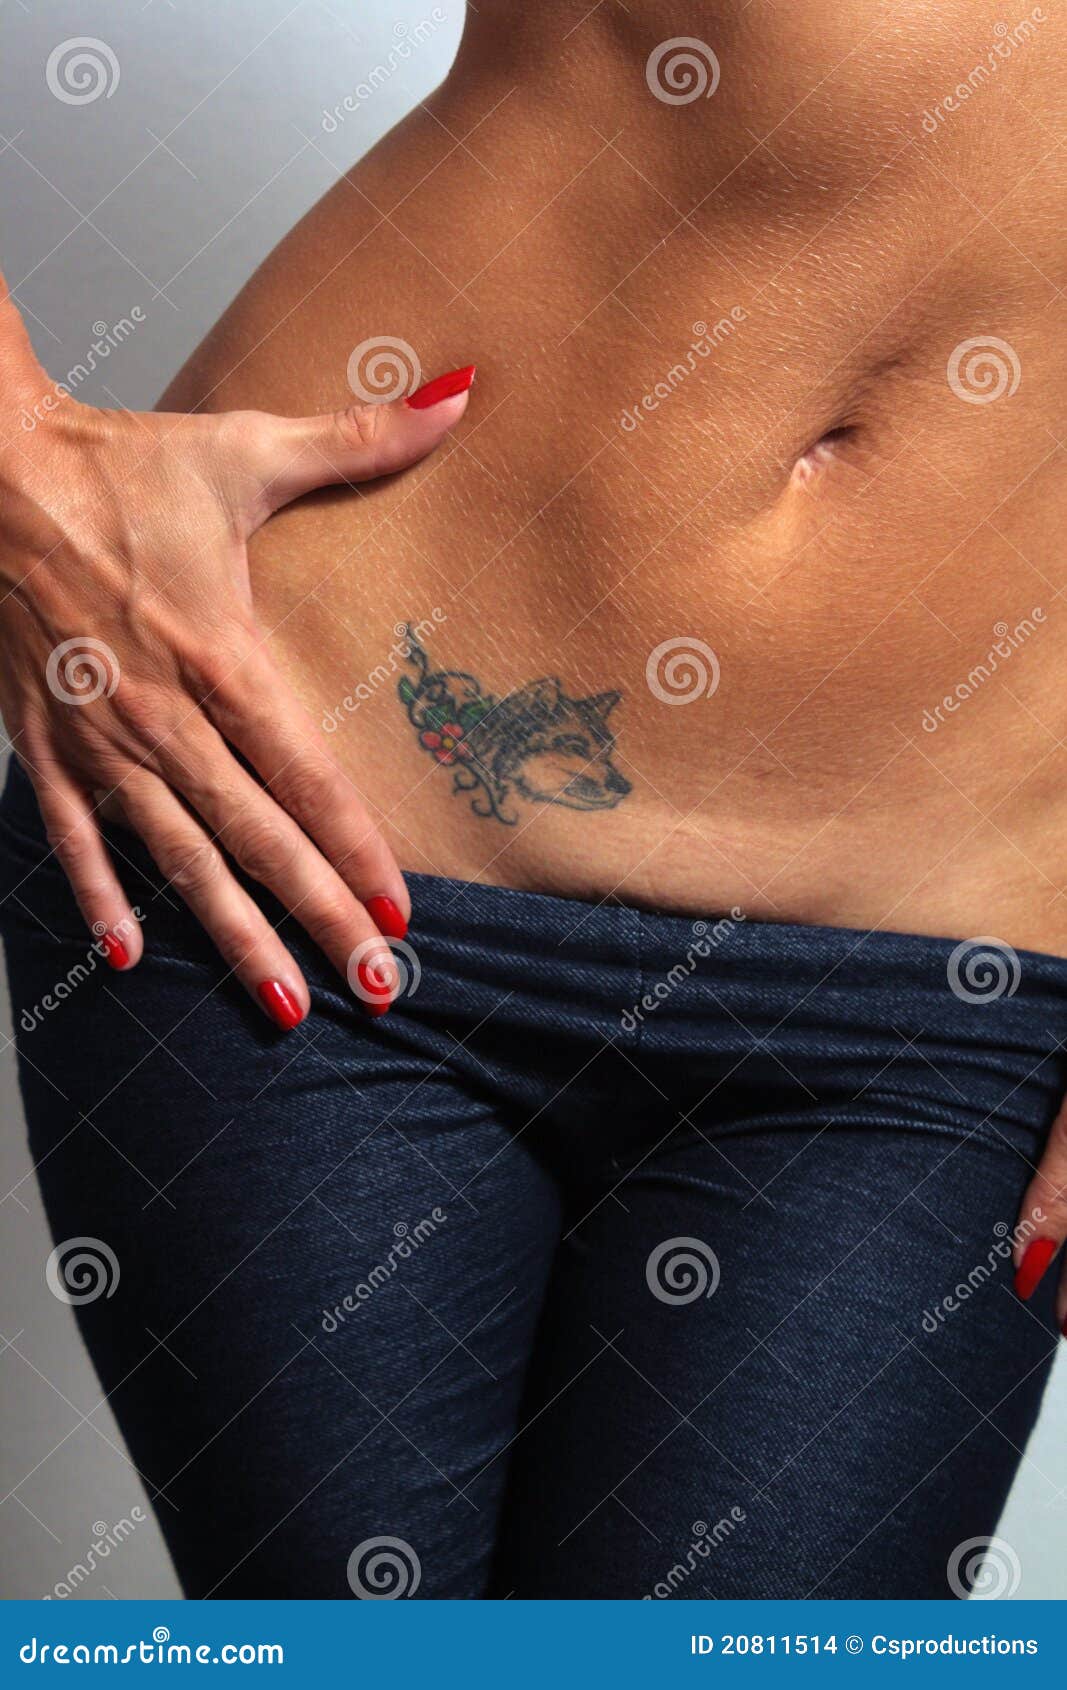 Female Abdomen with Tattoo (1)